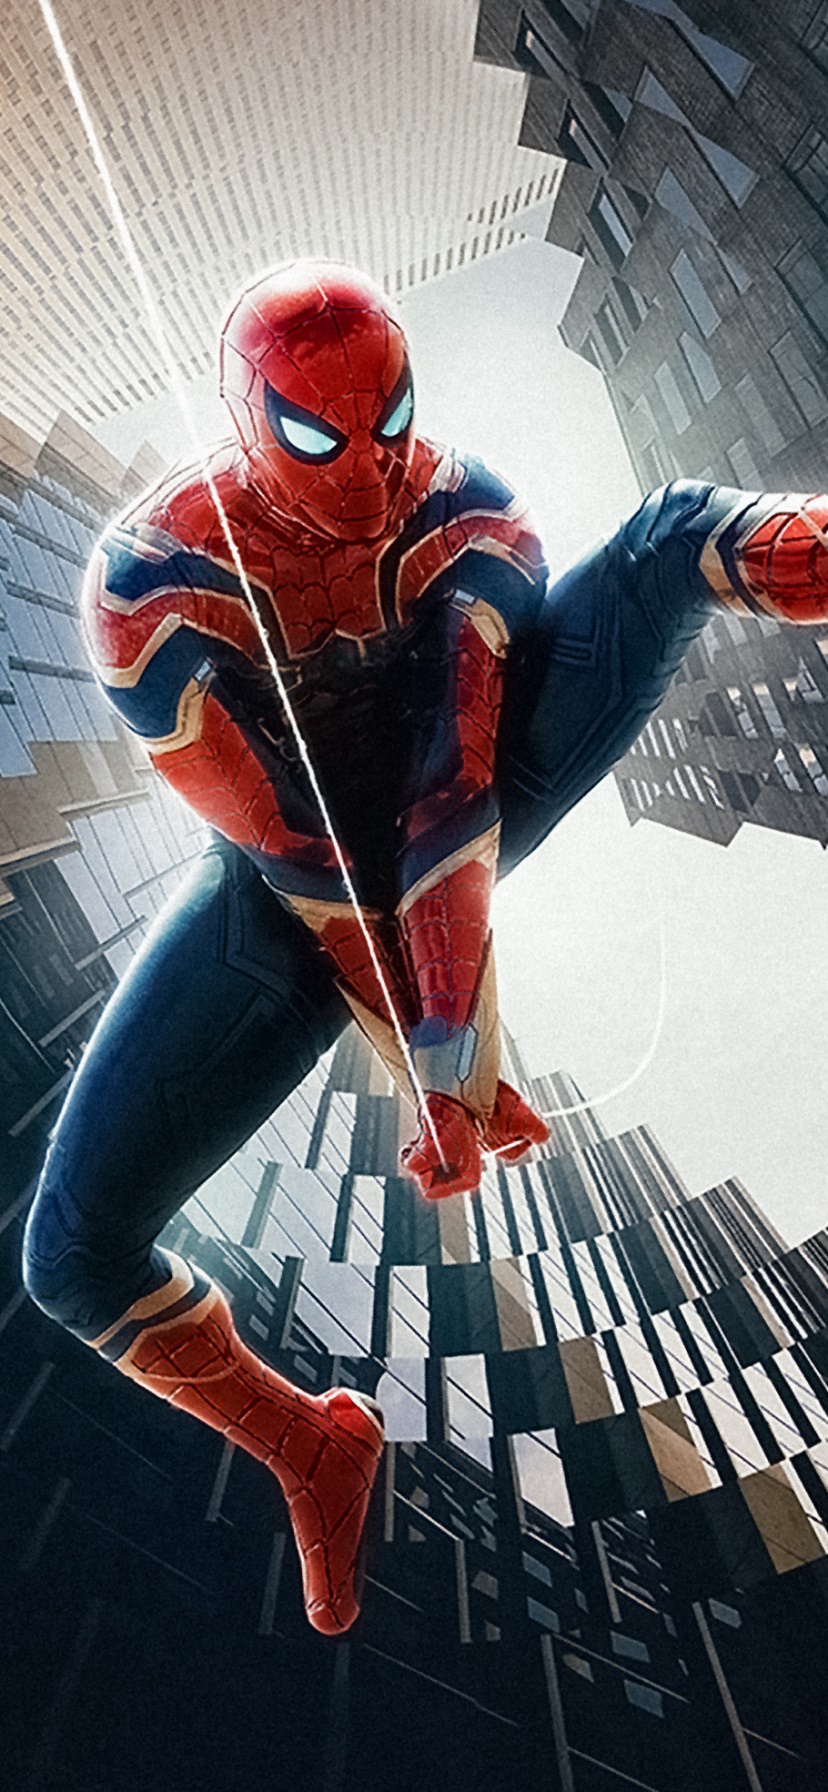 Wallpaper / Movie Spider Man: No Way Home Phone Wallpaper, Spider Man, Peter Parker, 828x1792 Free Download